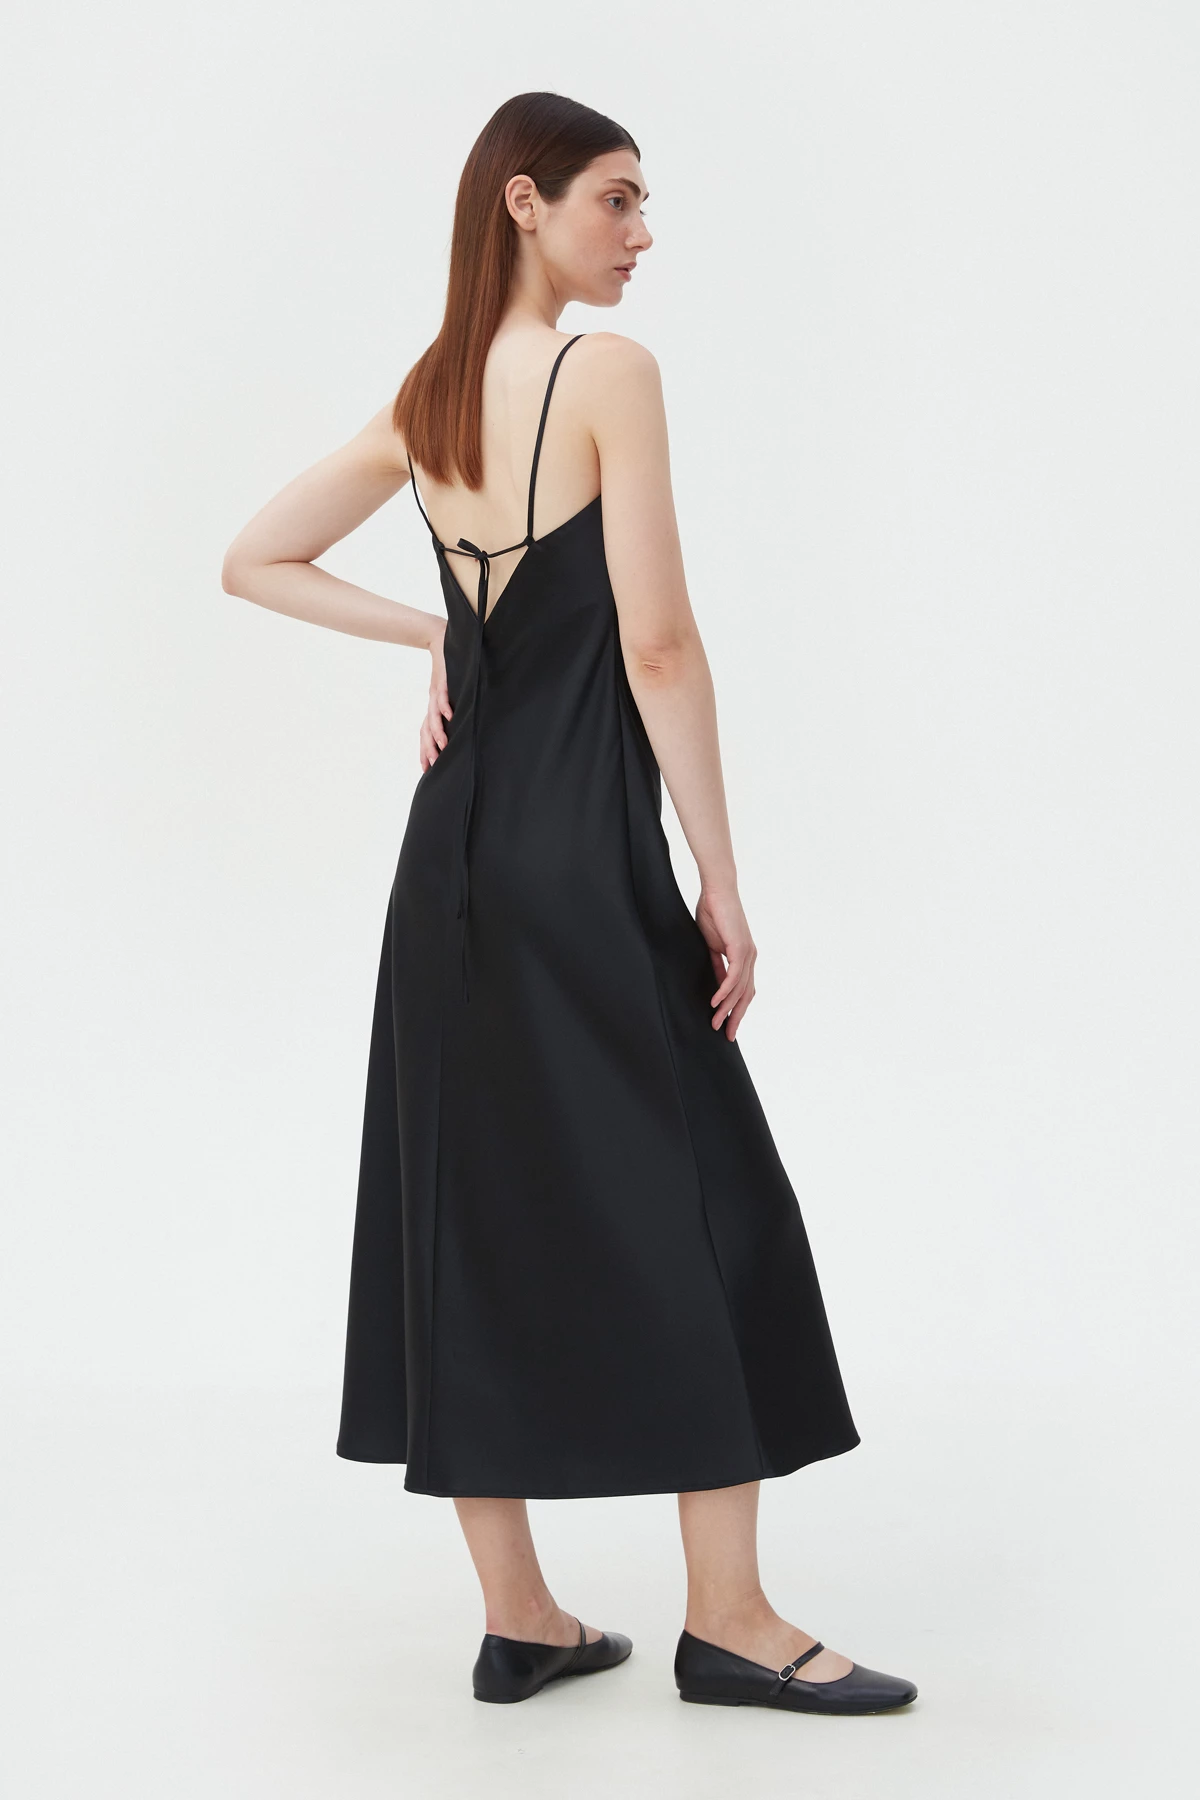 Black satin open-back dress, photo 3